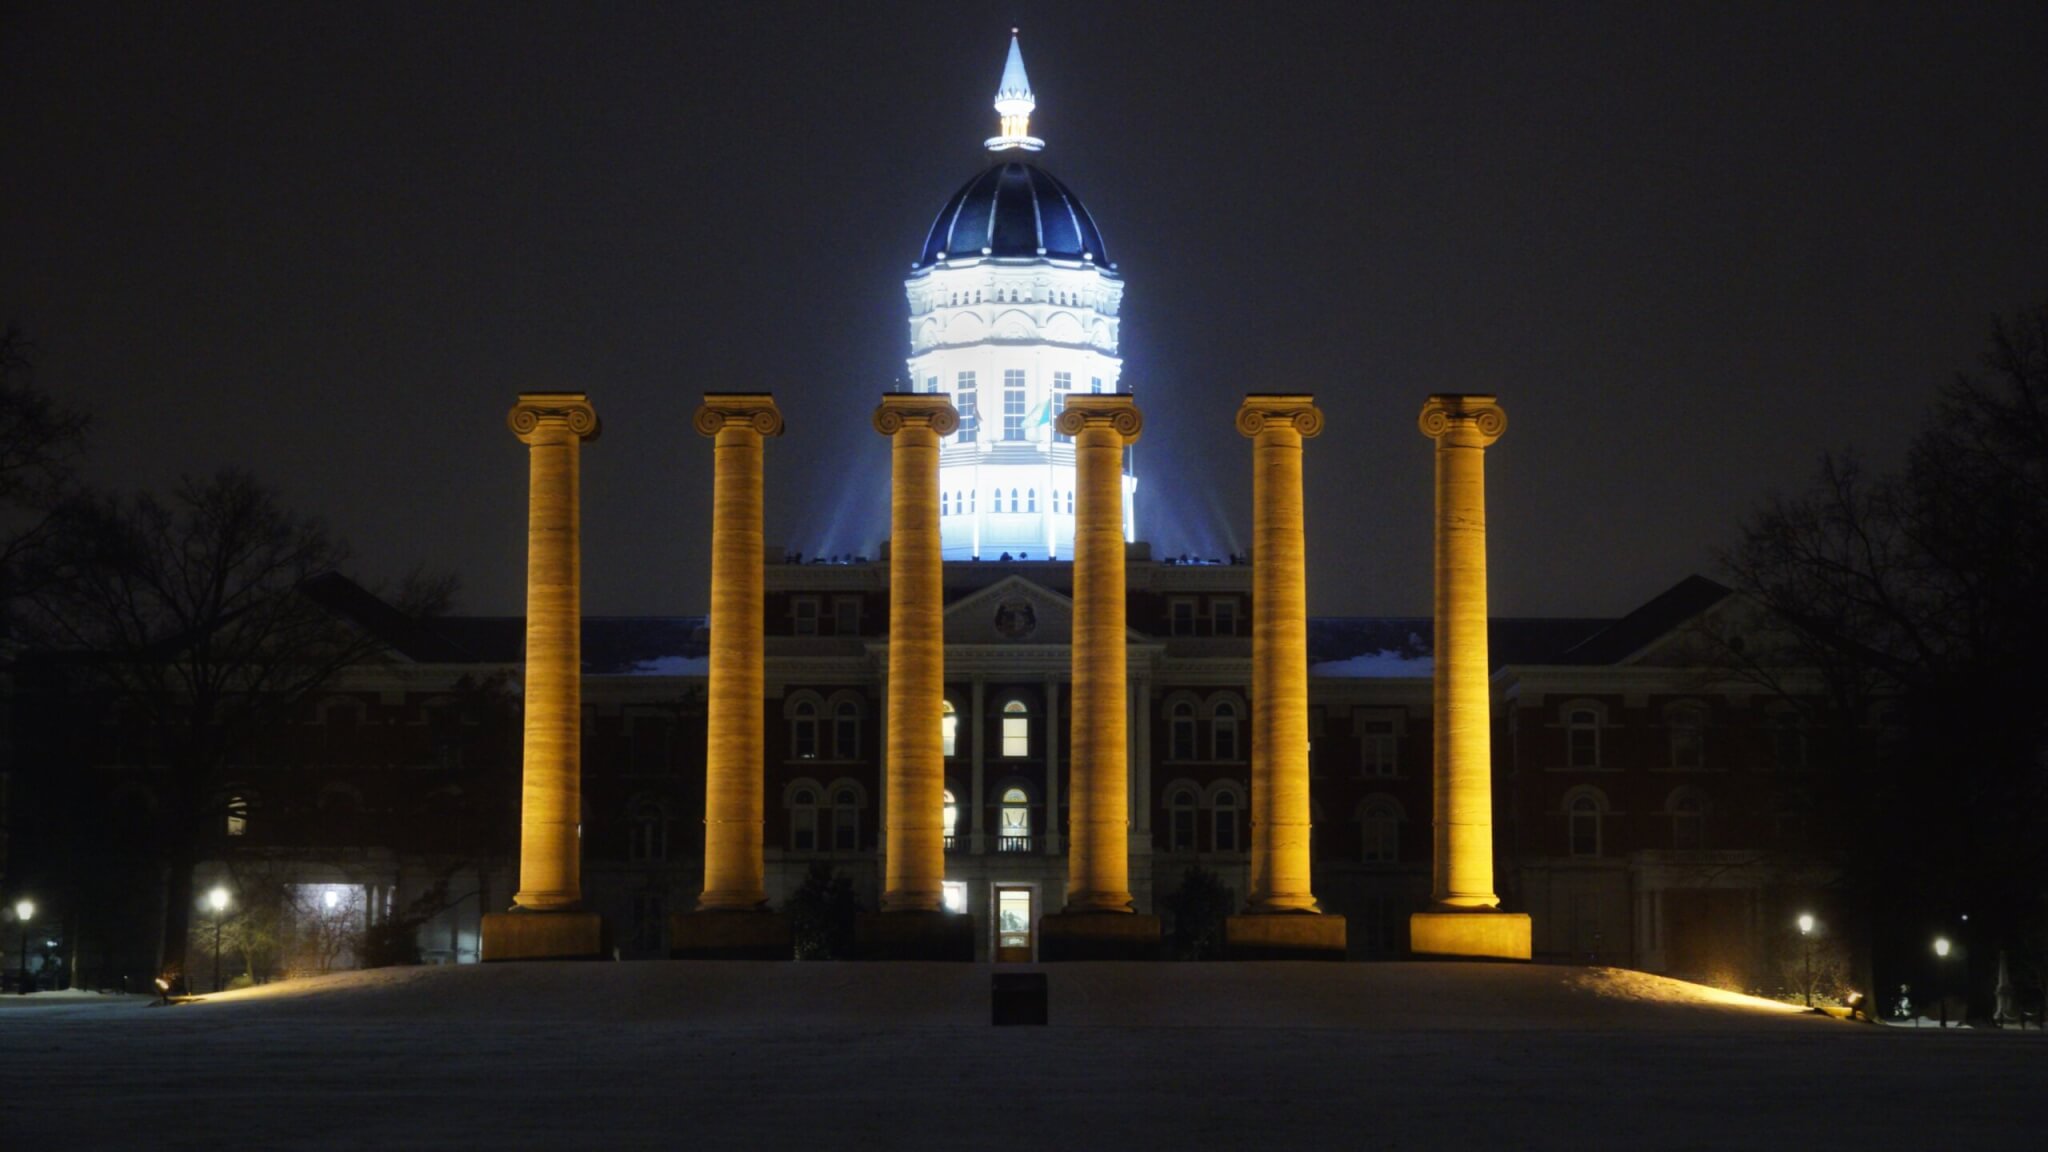 The University of Missouri in Columbia 